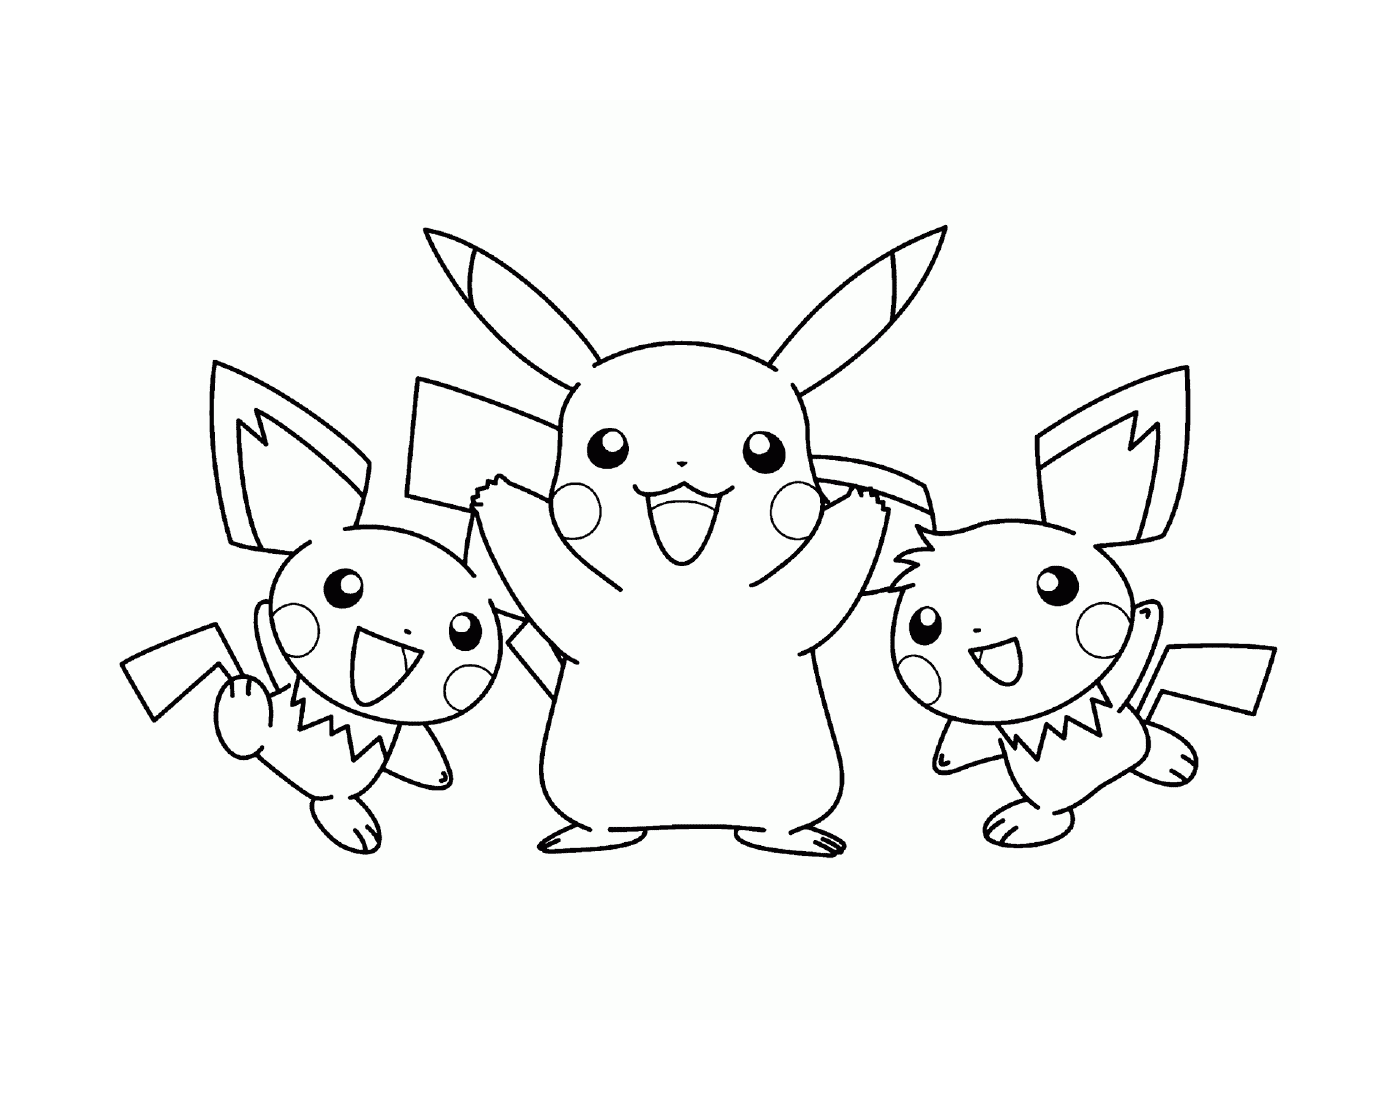  Three Pikachus together 